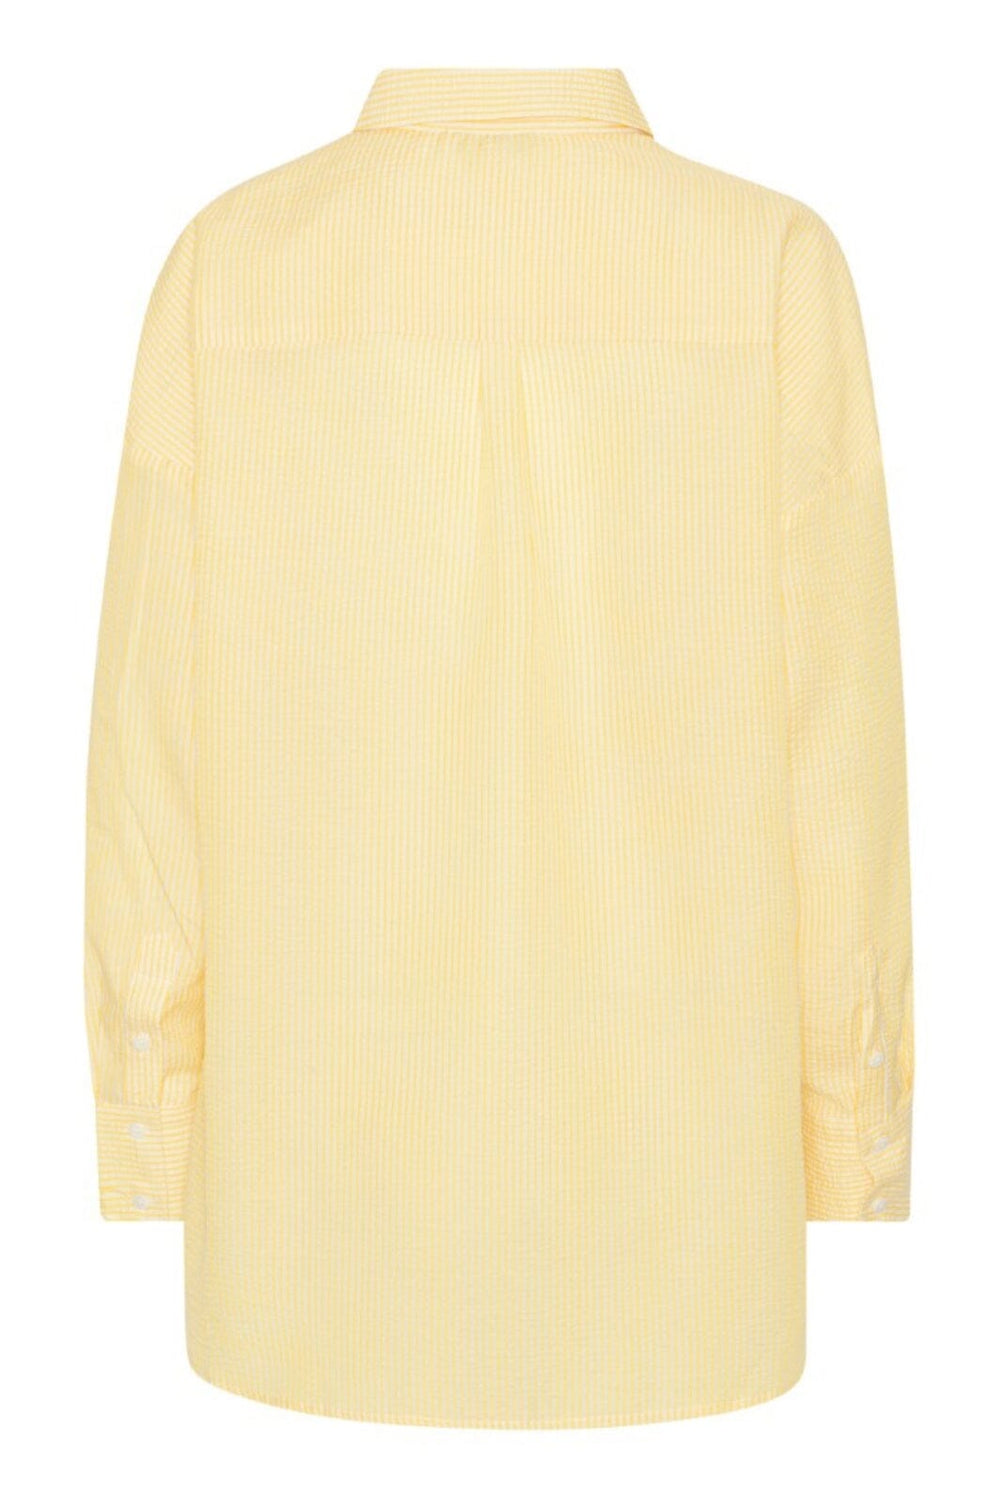 A-View - Sonja Shirt - 123 Yellow/White Skjorter 